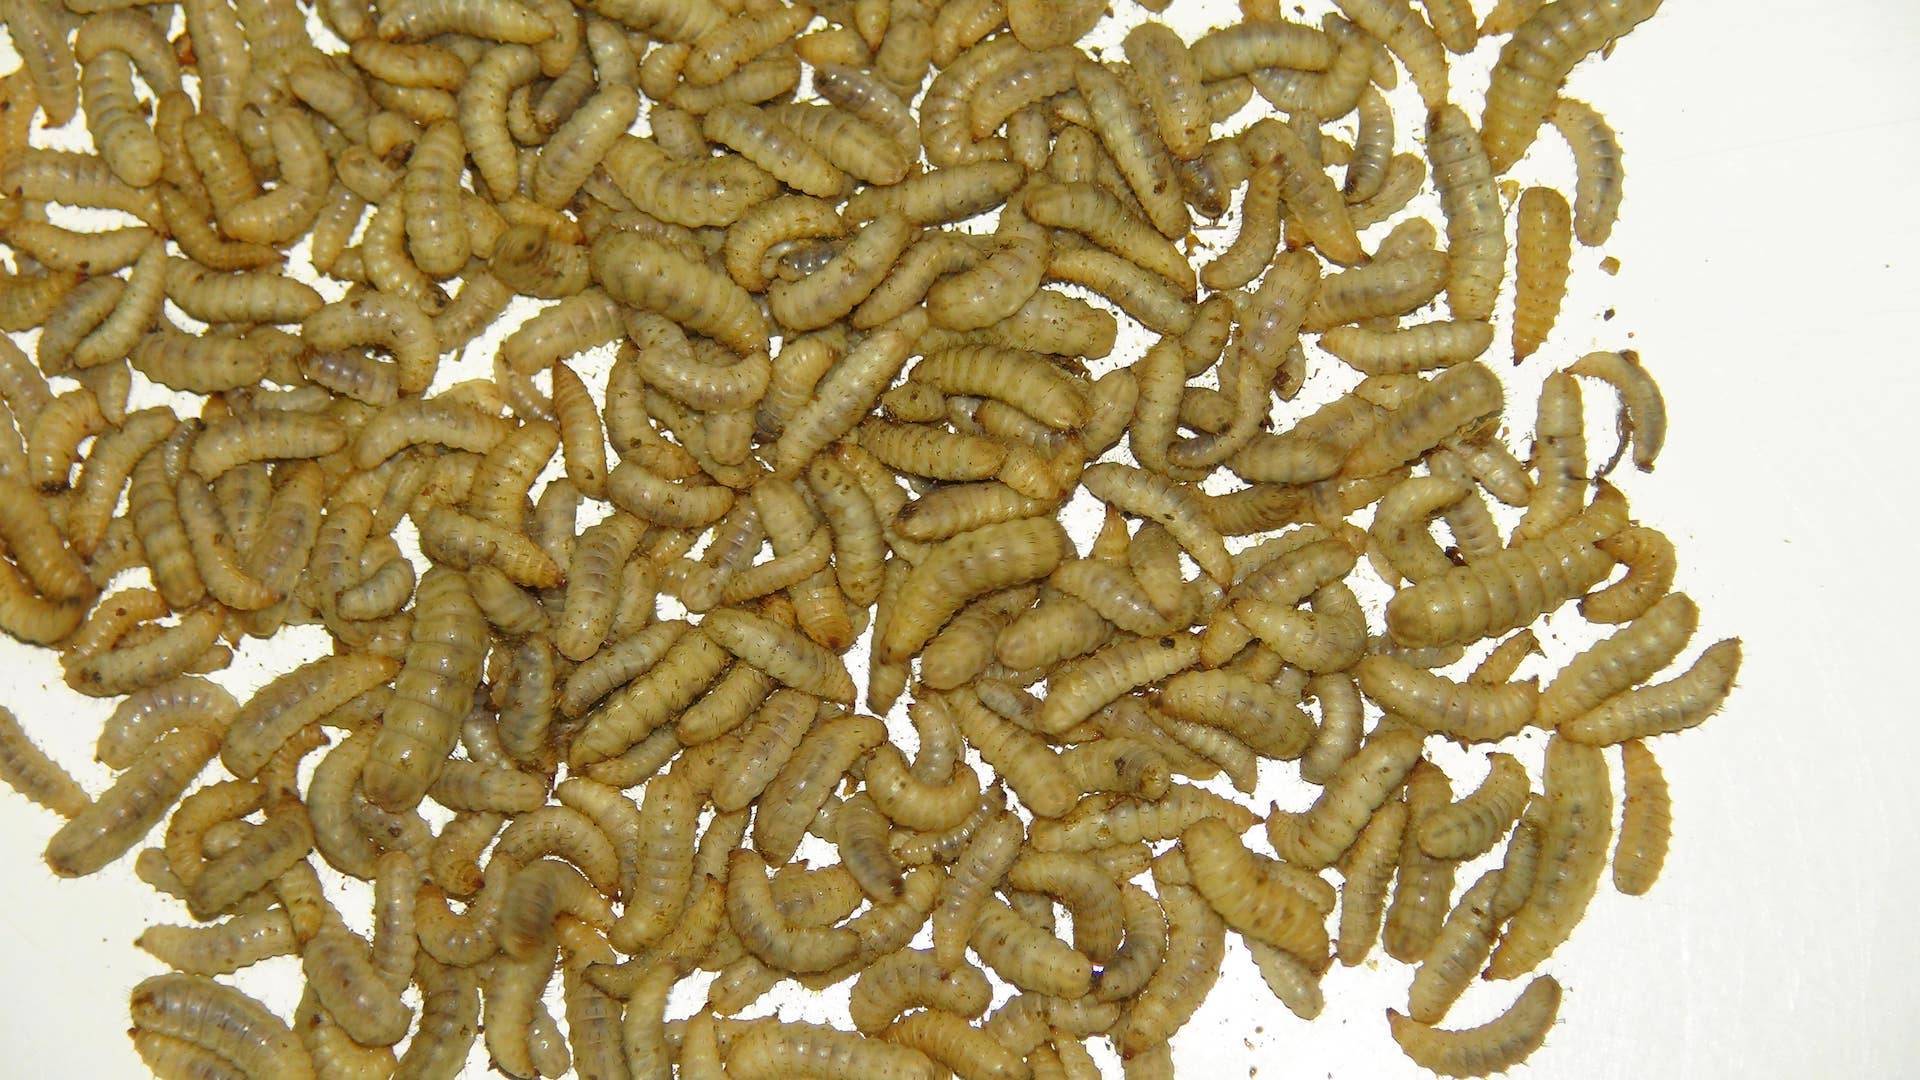 Львинки - описание и фото мух, личинок, предкуколки stratiomyidae